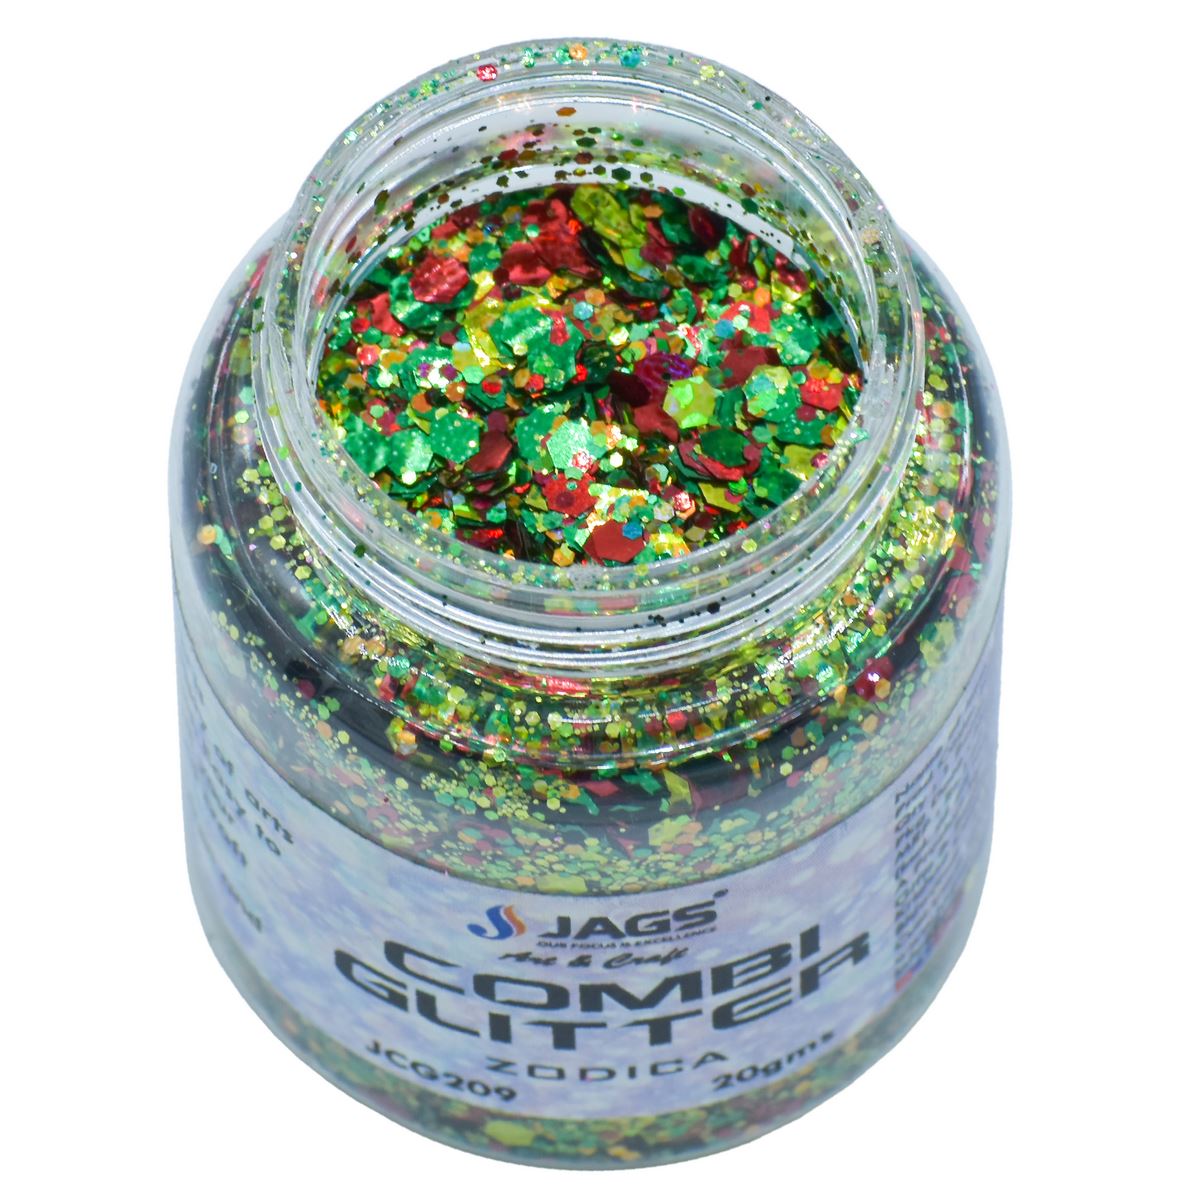 jags-mumbai Glitter Powder Combi Glitter Zodica 20Gsm